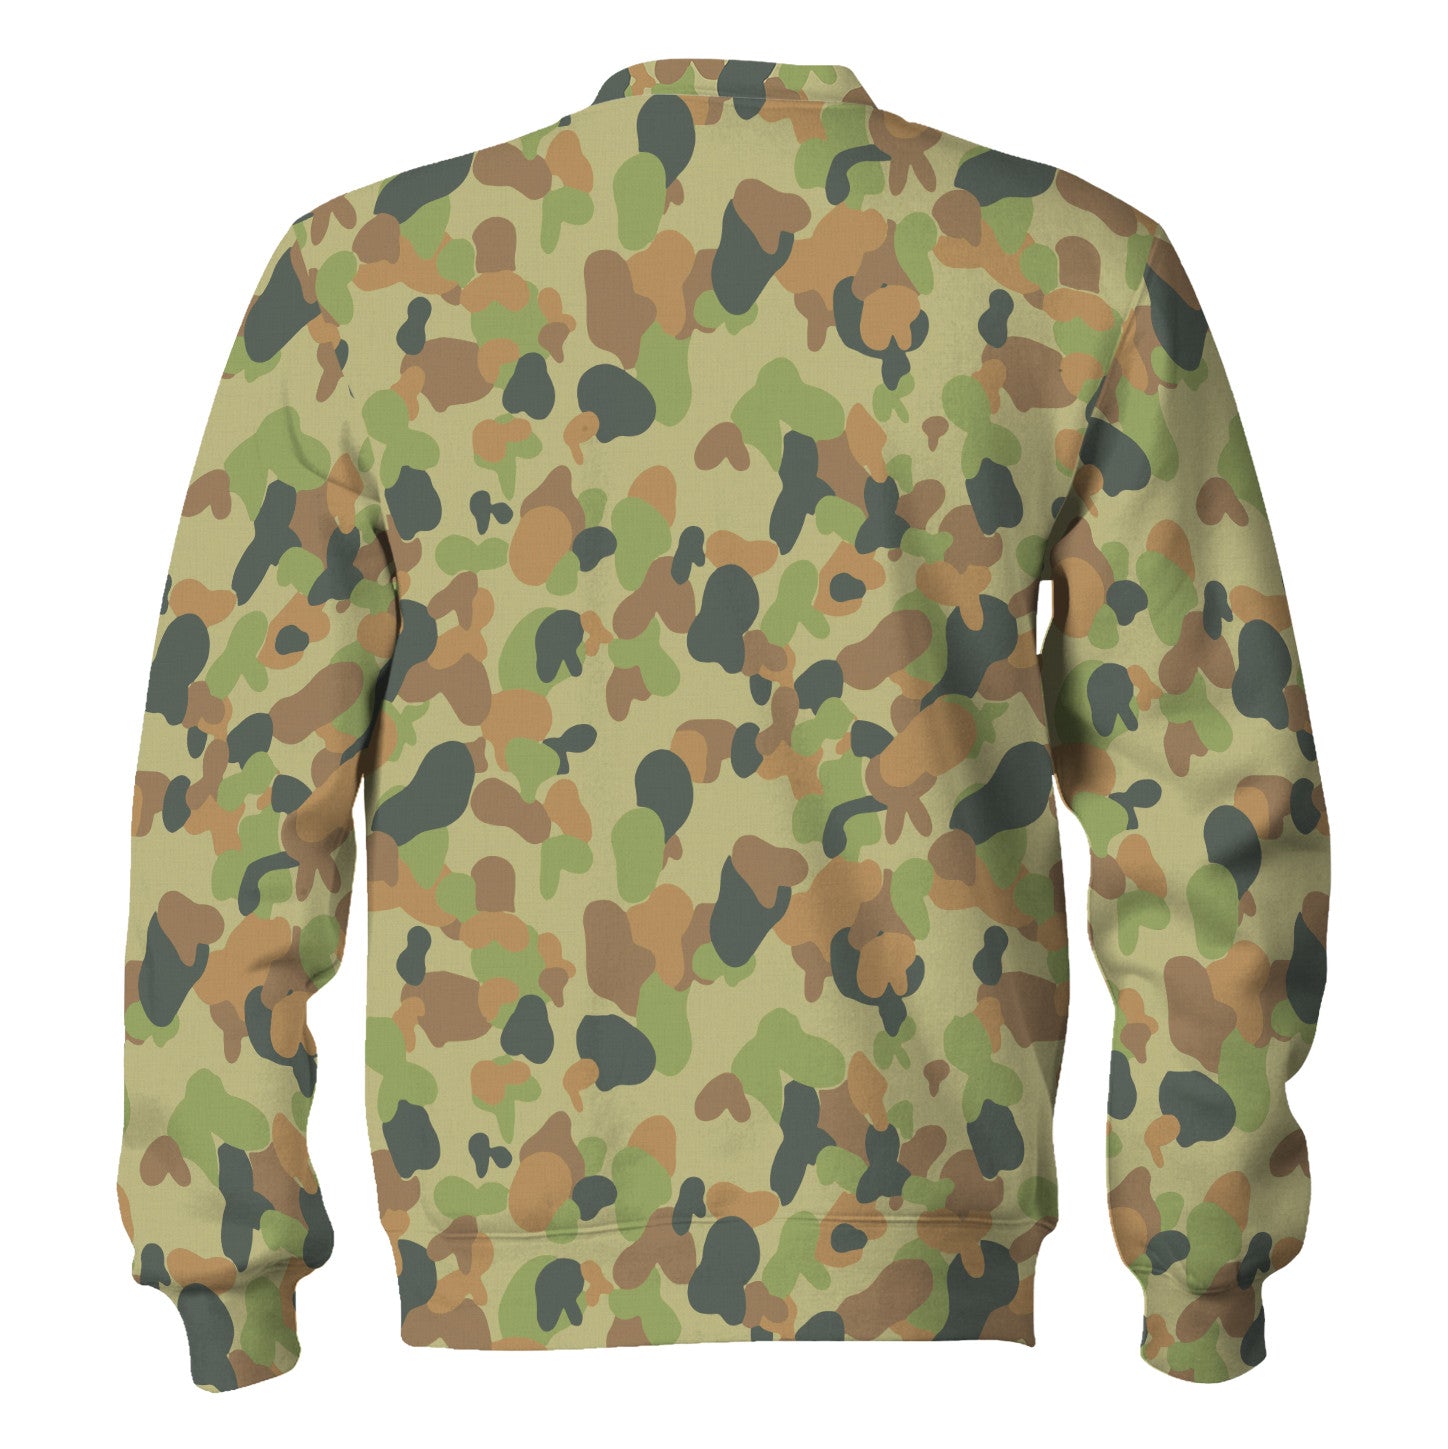 Australian AUSCAM Disruptive Pattern Camouflage Uniform Jelly Bean Camo Or Hearts And Bunnies Sweatshirt